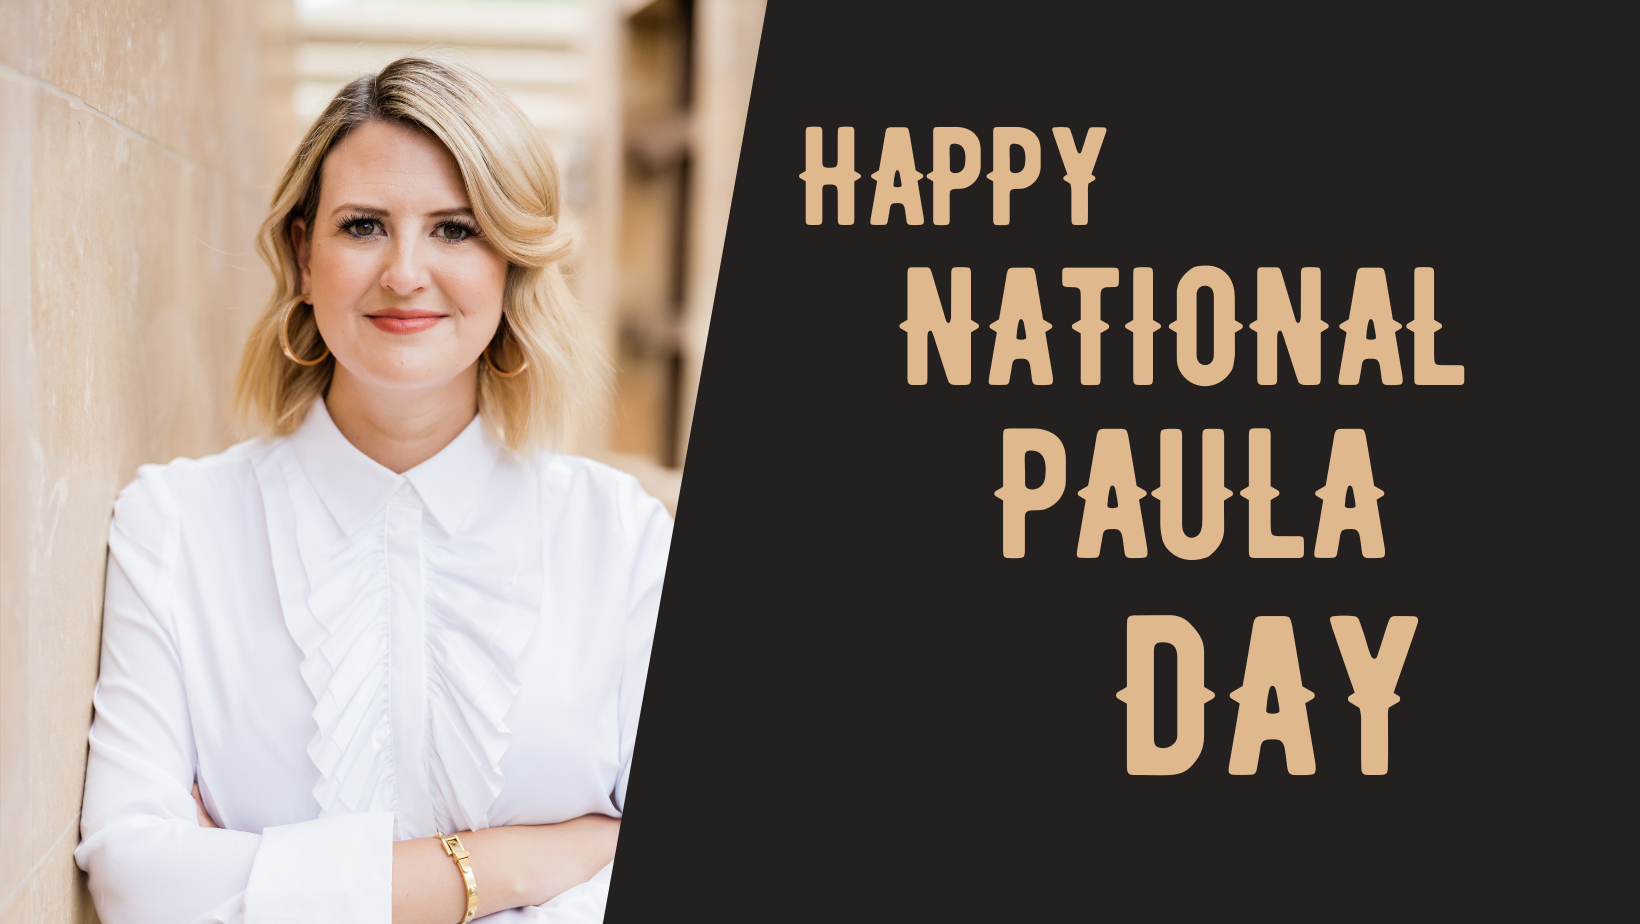 National Paula Day